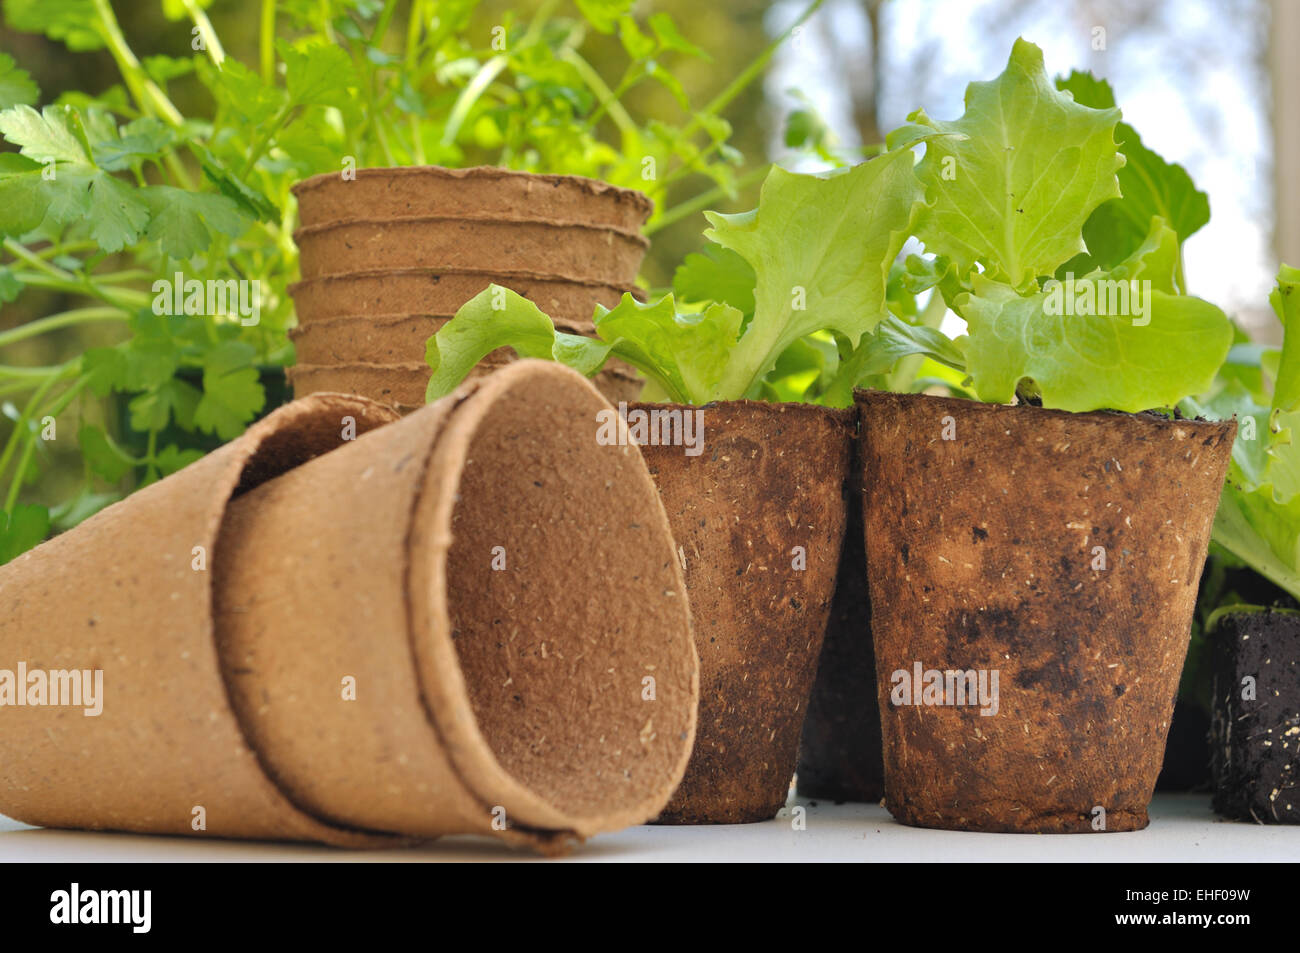 seedling lettuce in biodegradable pots on white table Stock Photo